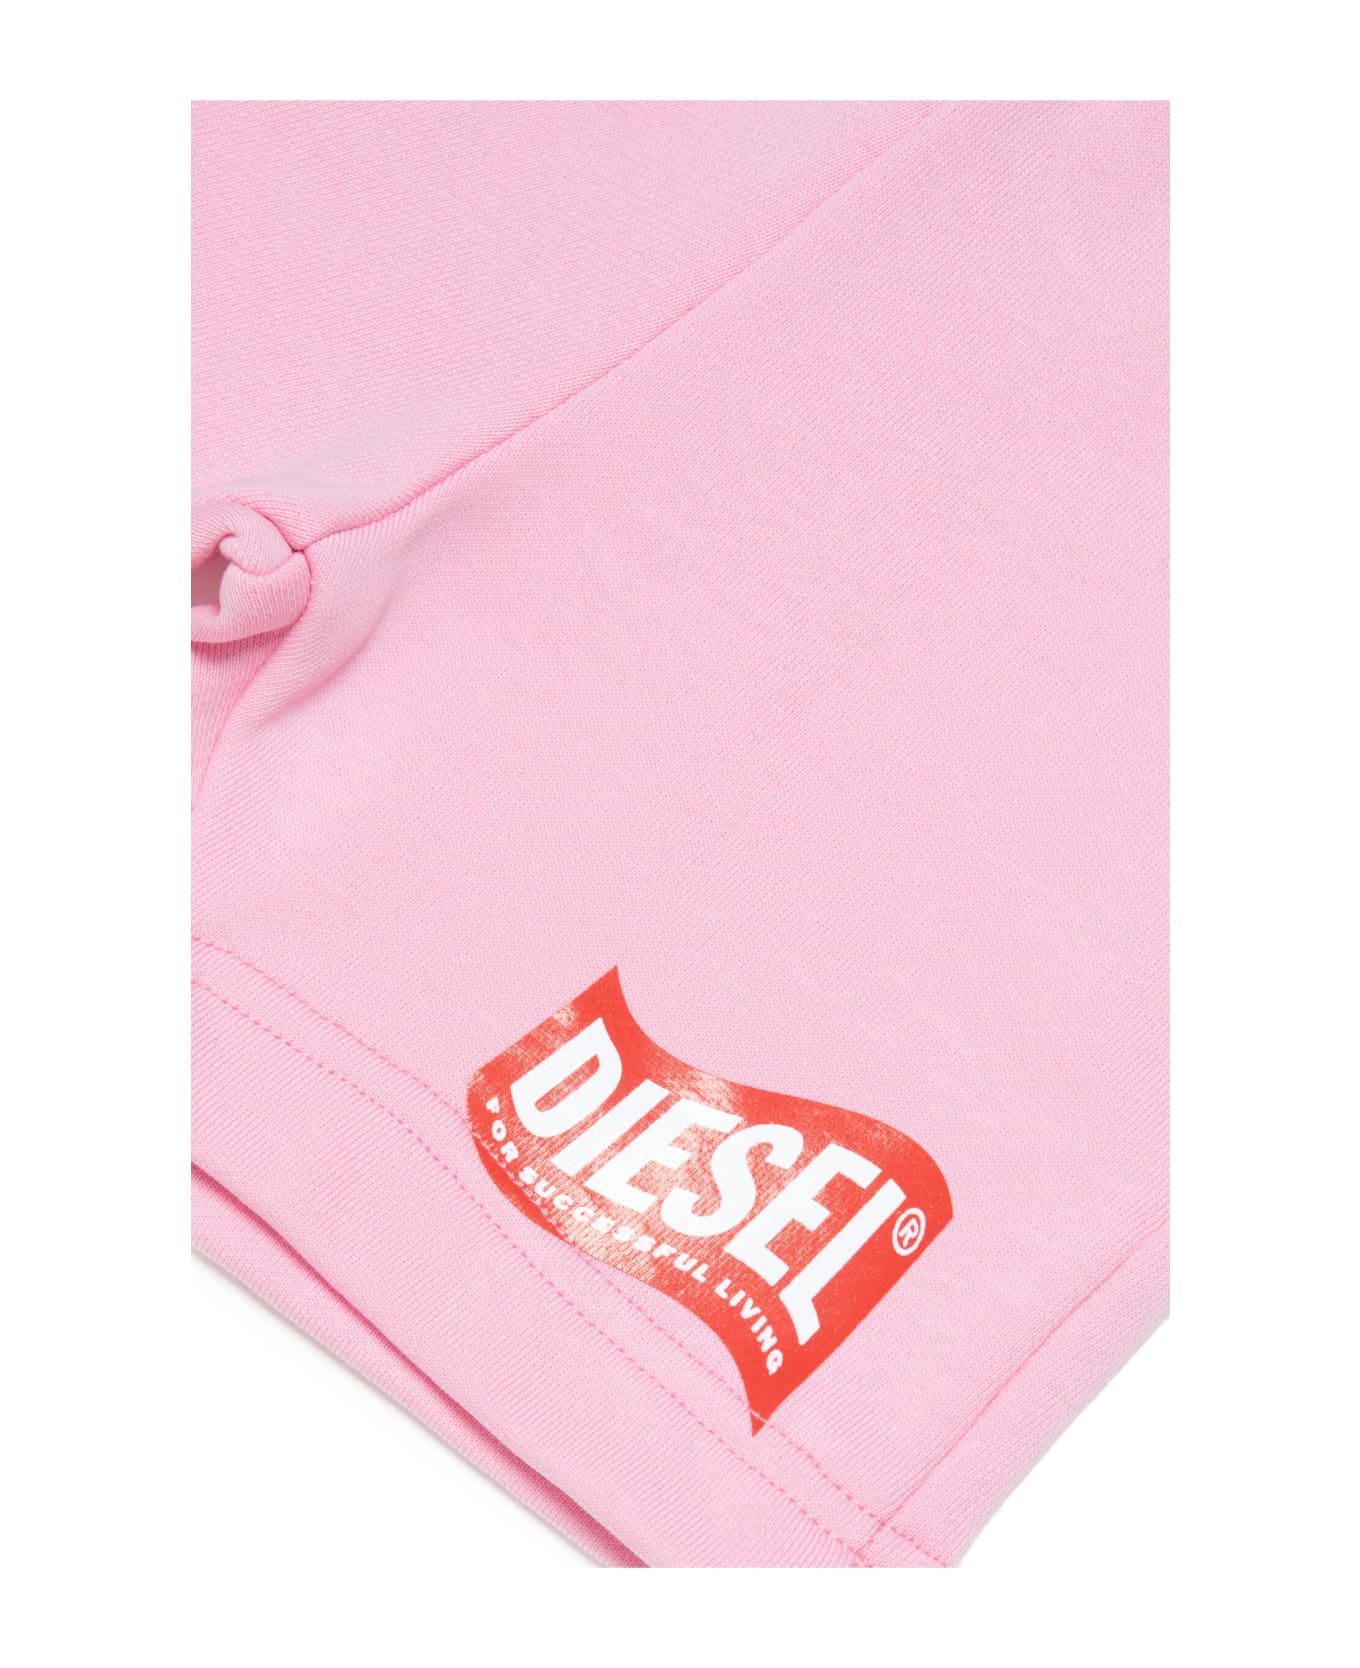 Diesel Pannyb Shorts Diesel Pastel Pink Cotton Shorts With Logo In "wave" Version - Pastel pink